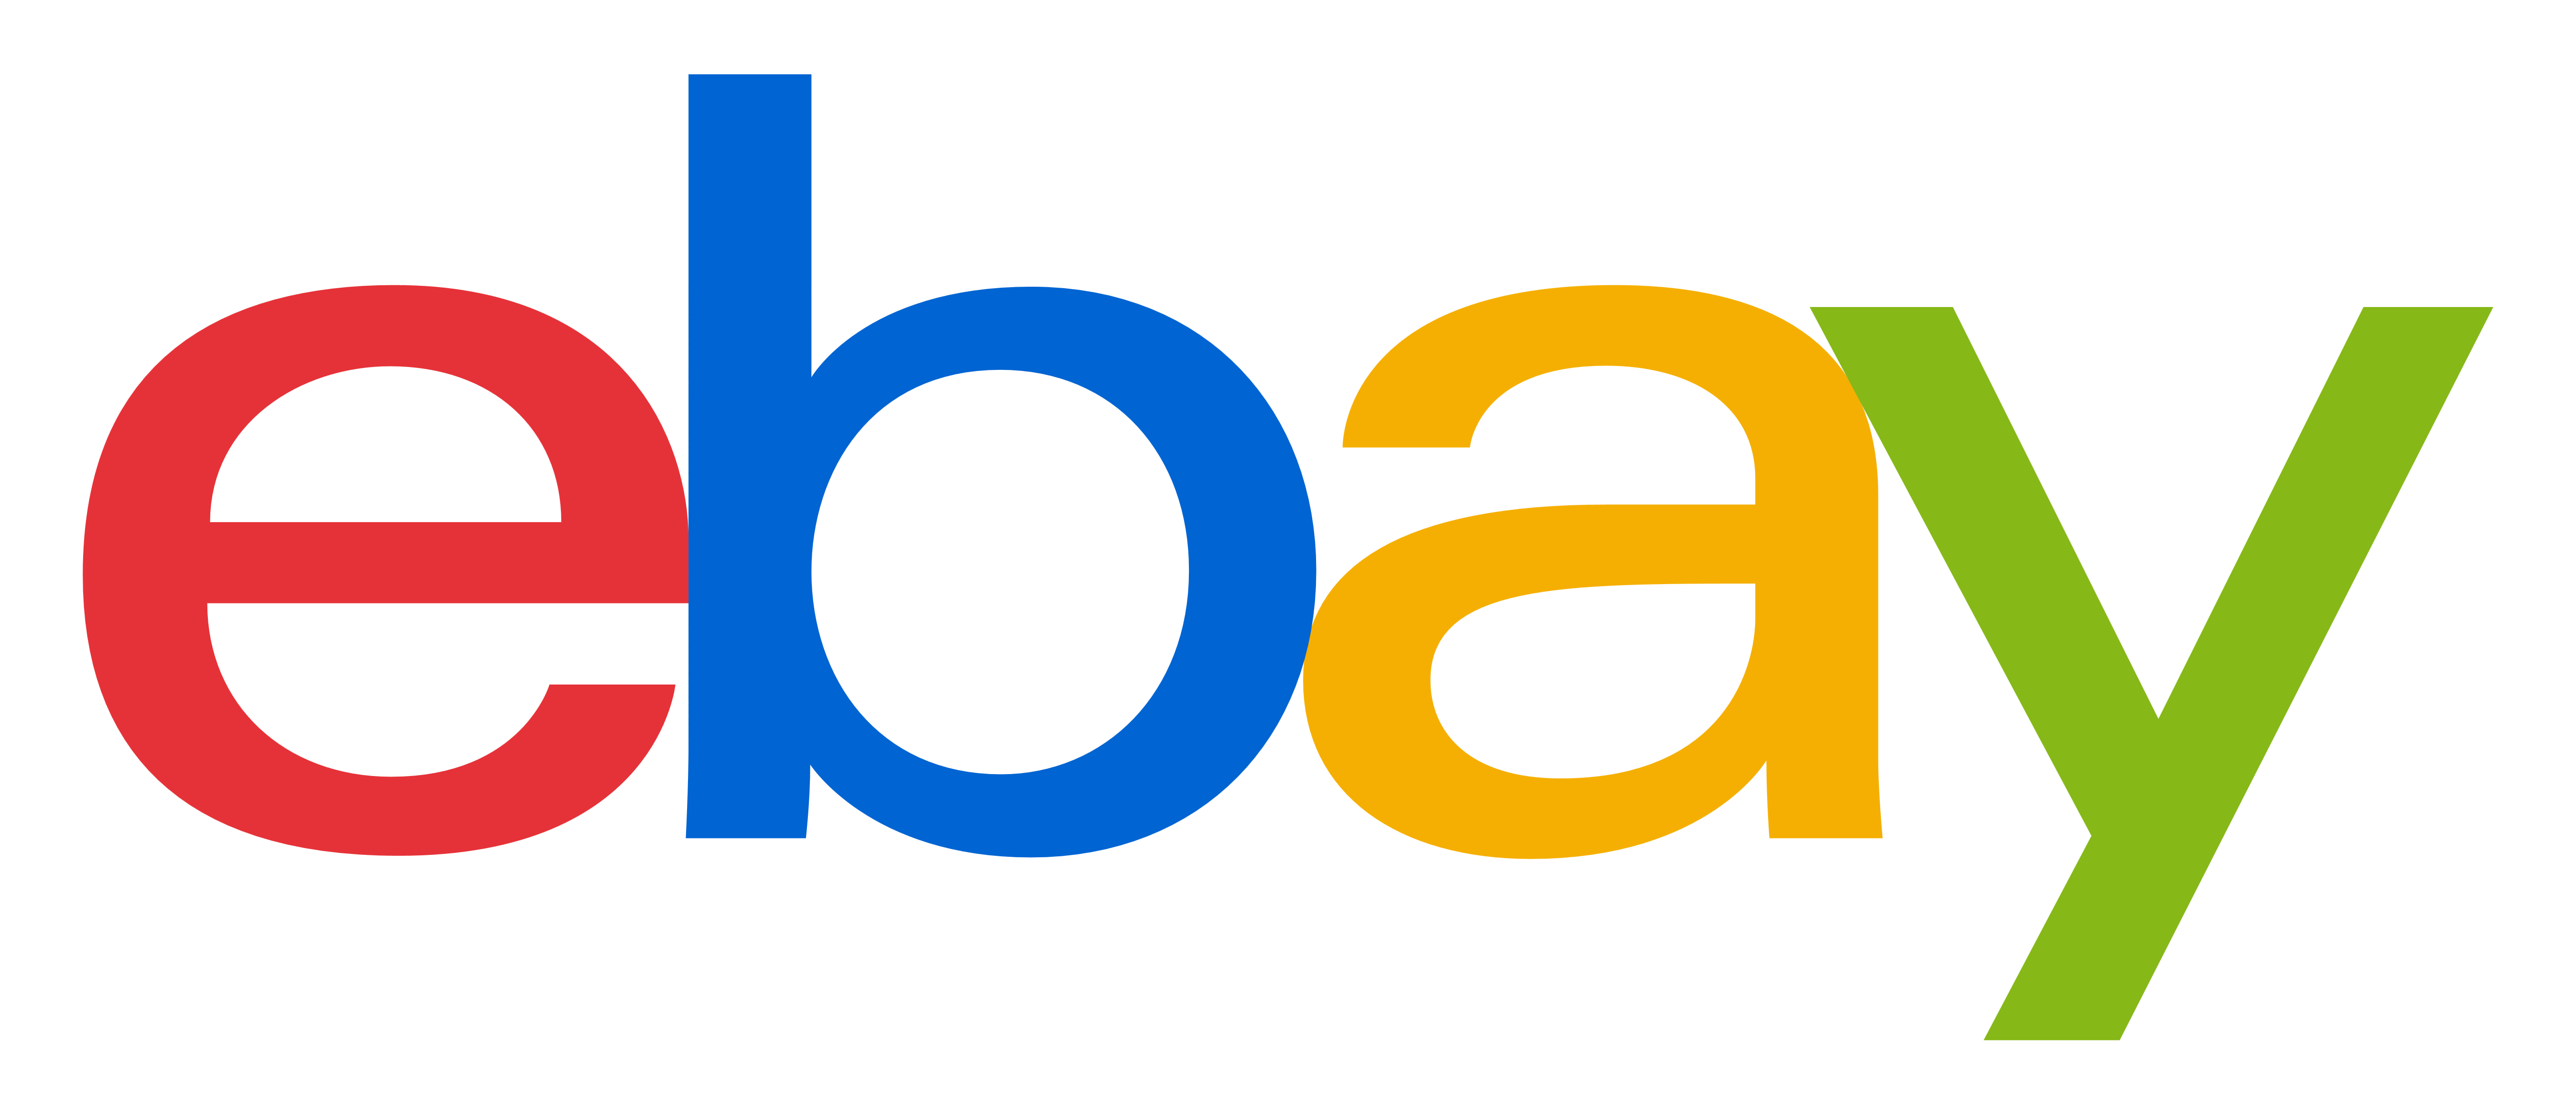 Logo Ebay PNG - 101785